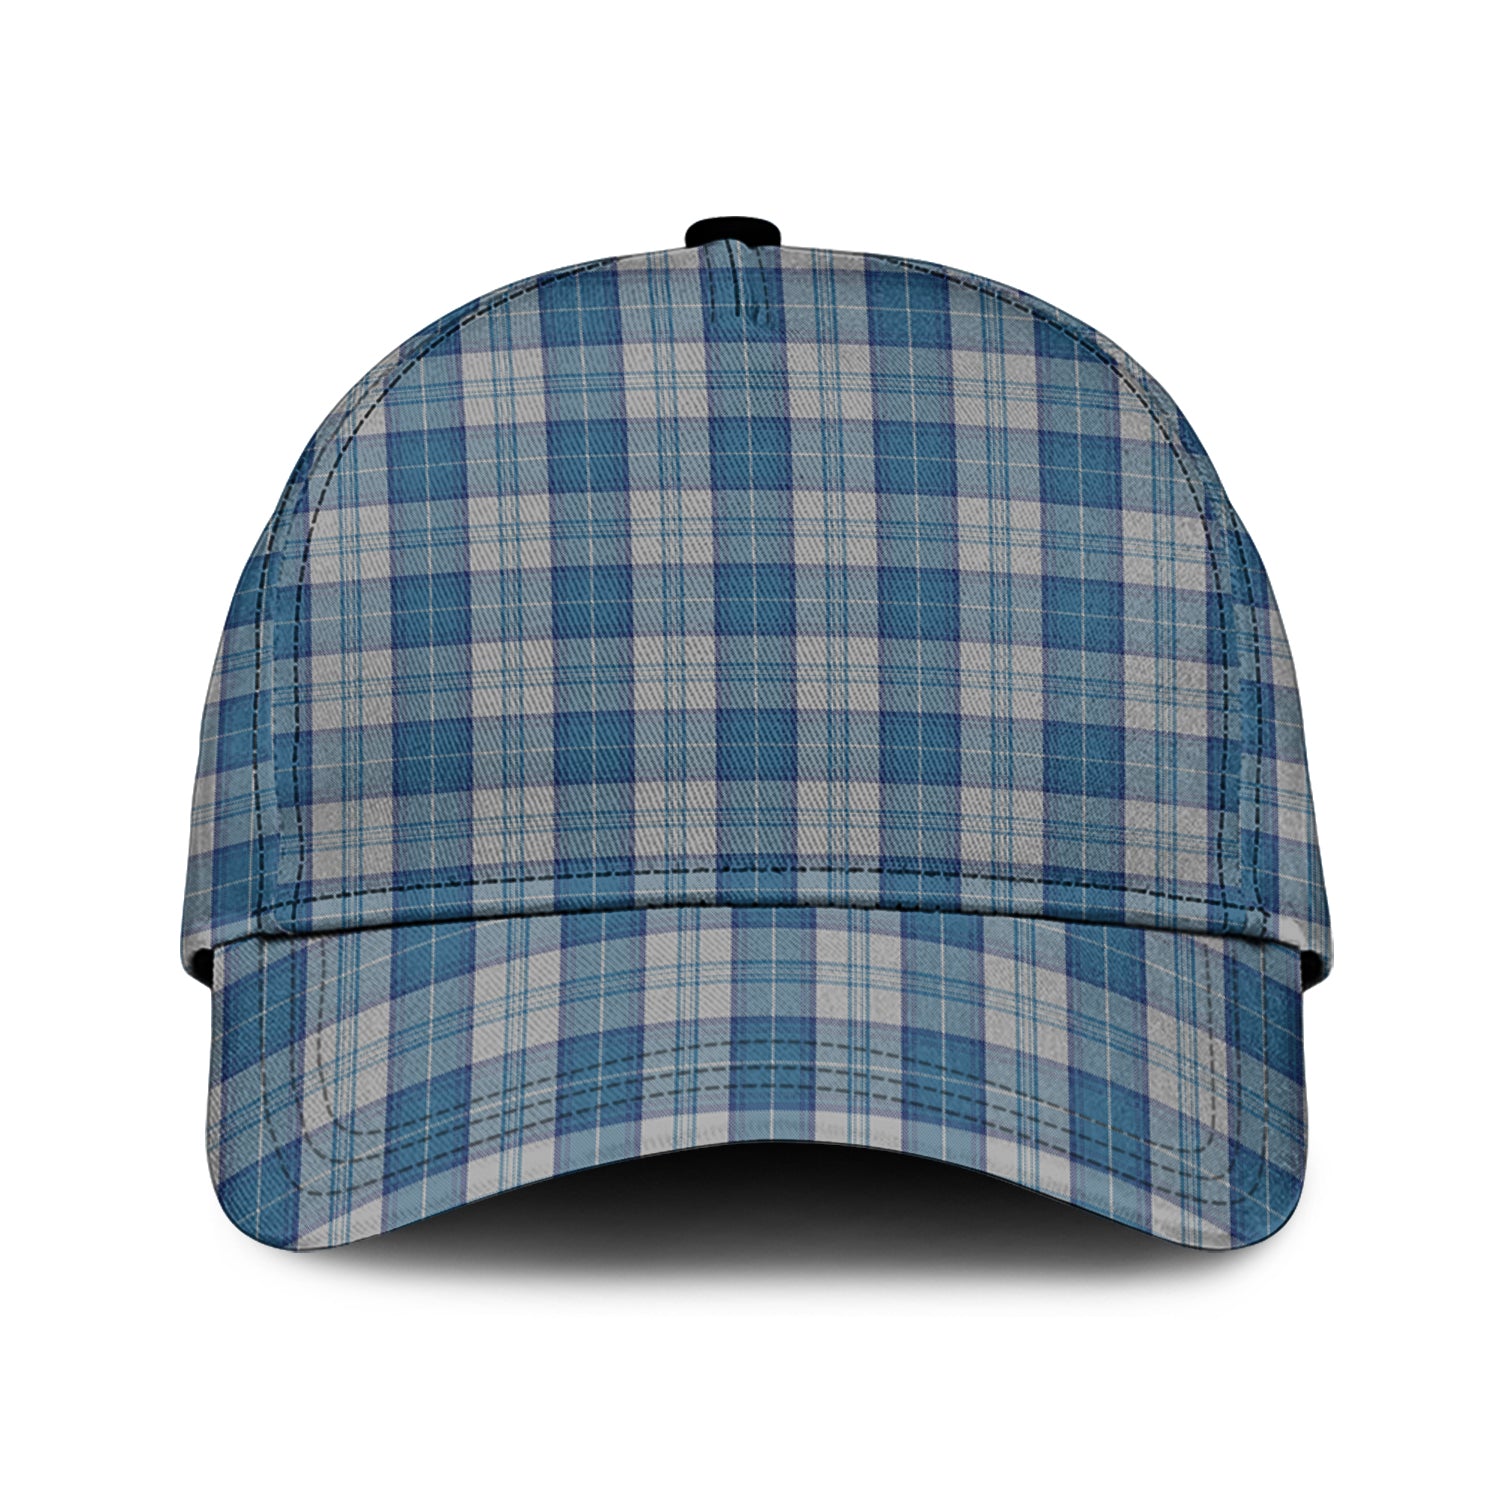 menzies-dress-blue-and-white-tartan-classic-cap